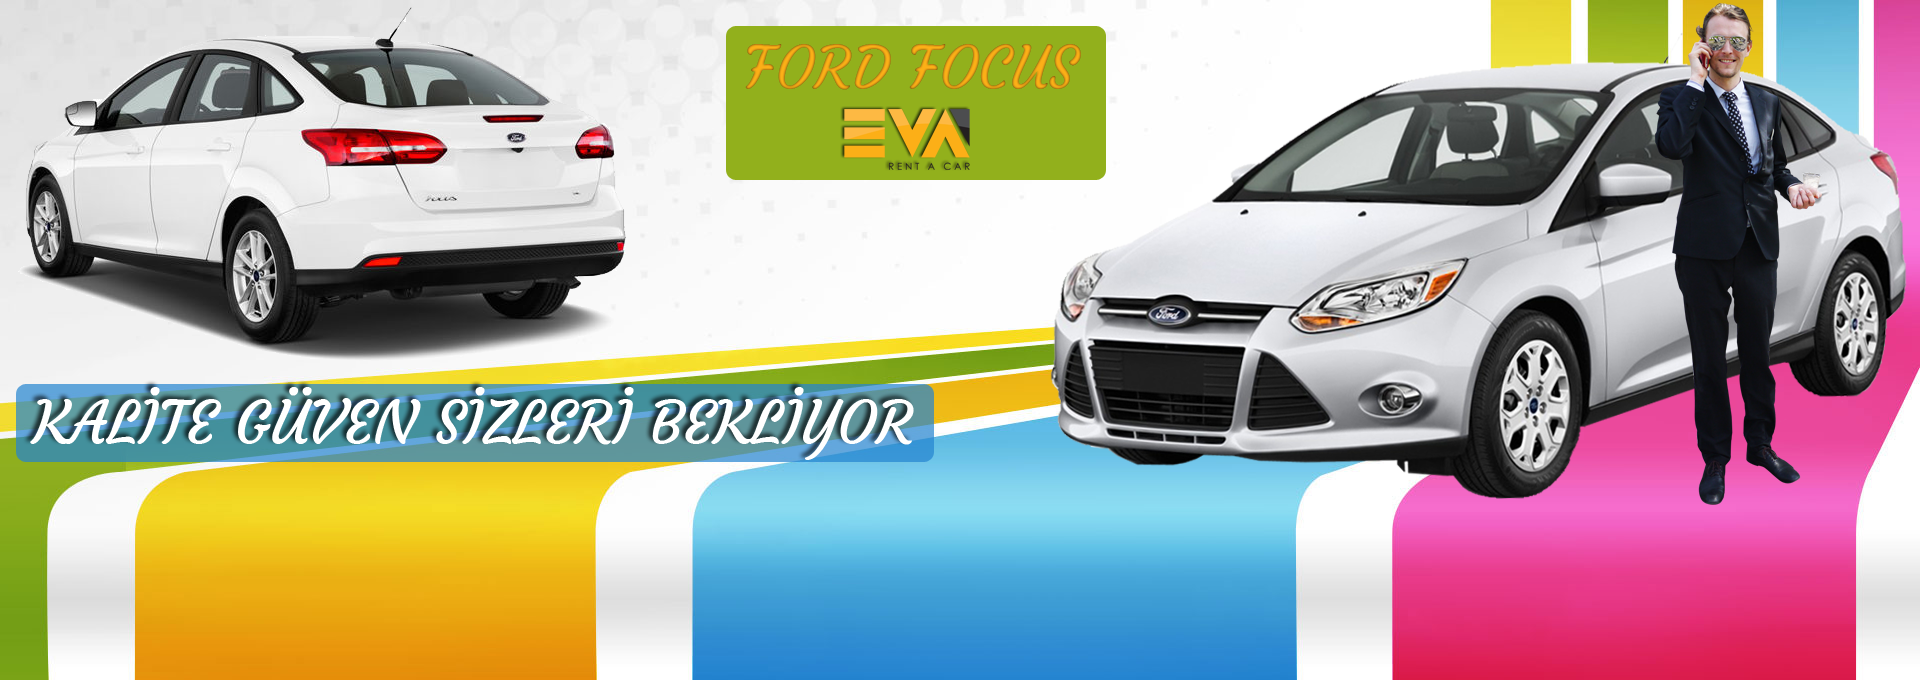 Eva Rent A Car Ford Focus